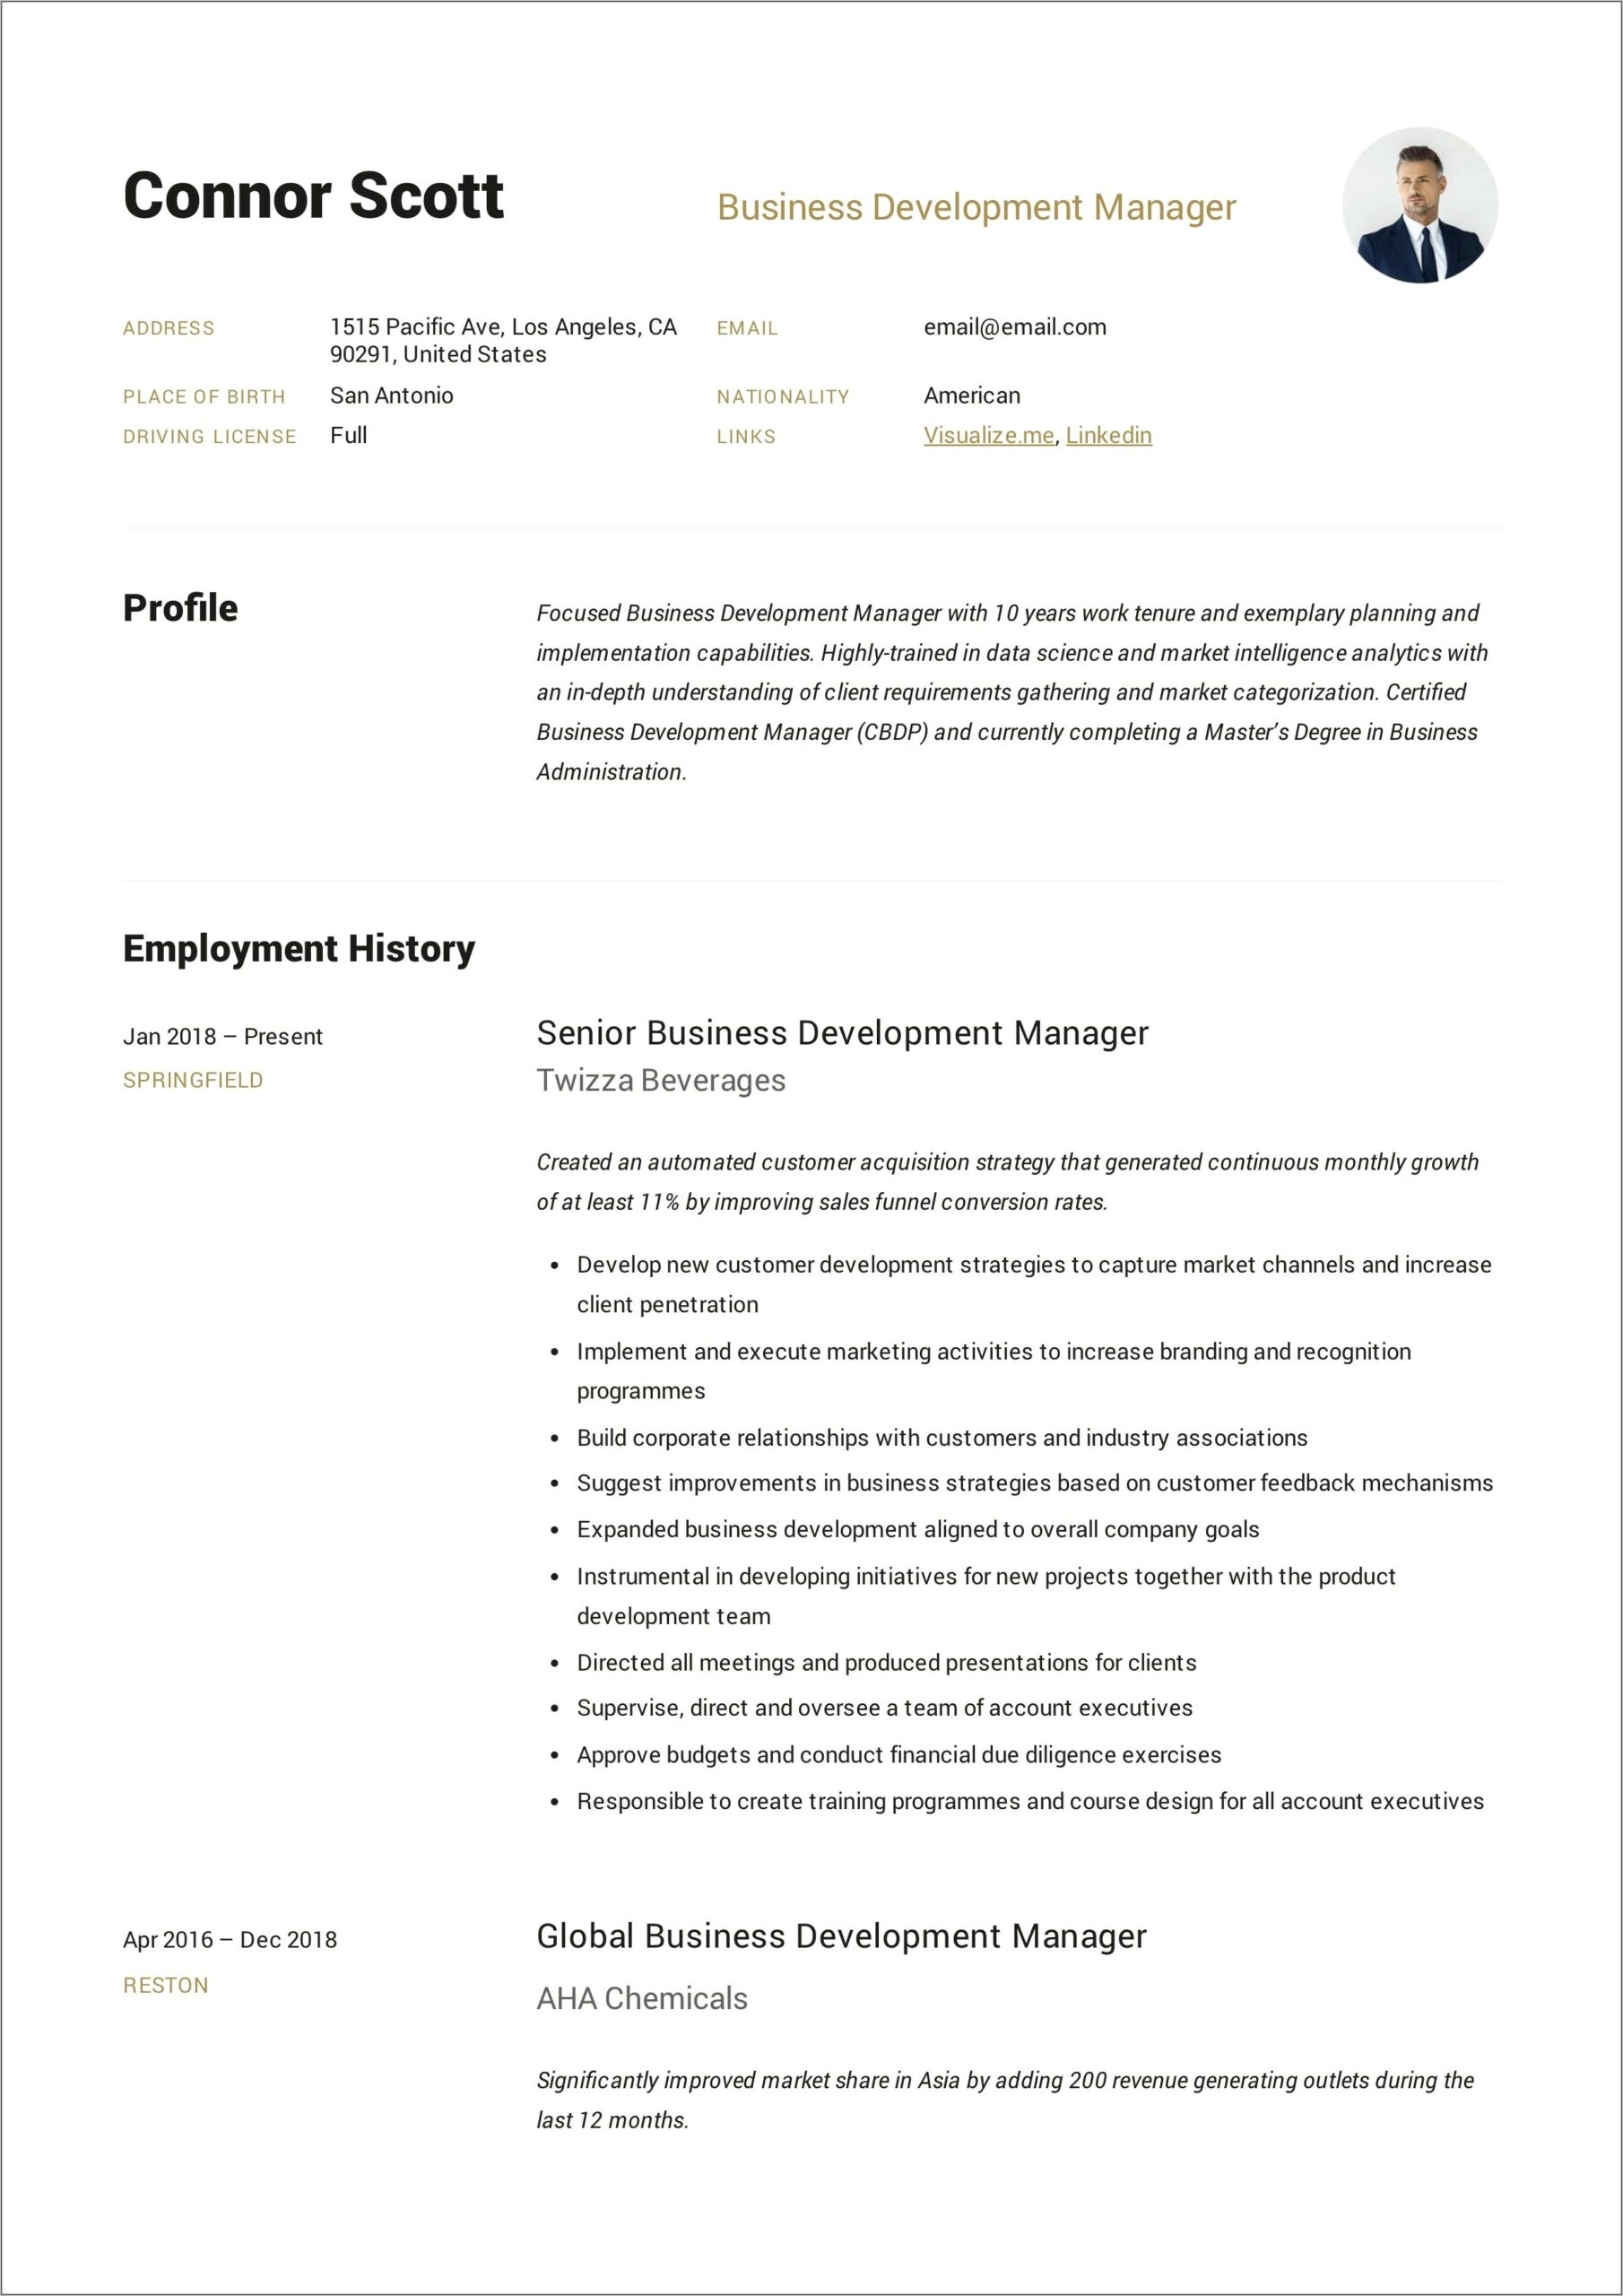 Resume Description For Business Development Specialist